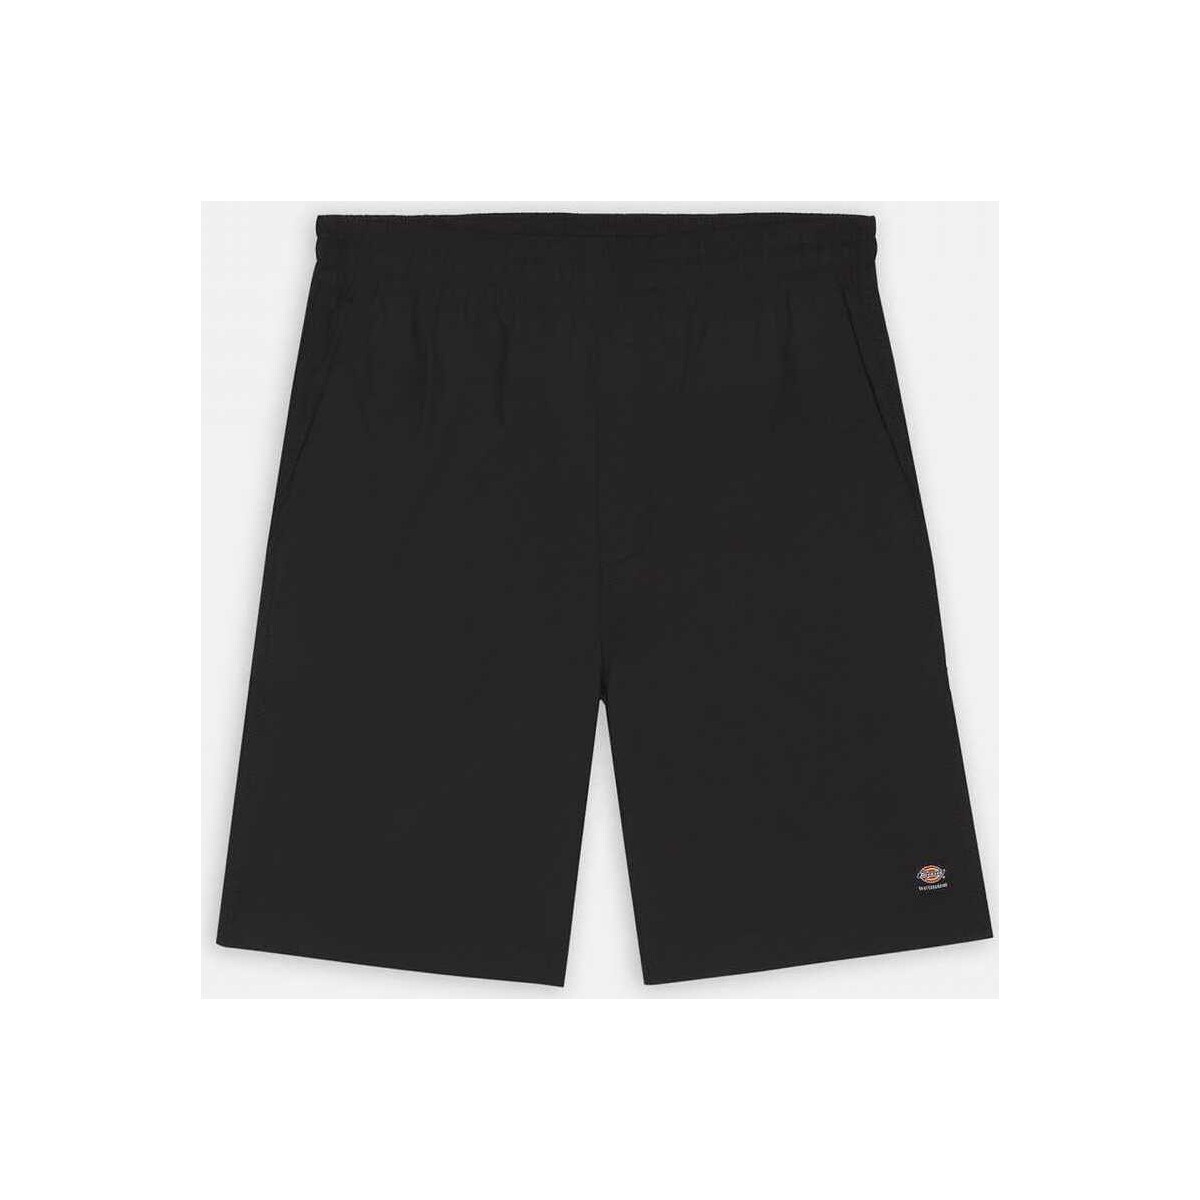 textil Hombre Shorts / Bermudas Dickies Jackson cargo short Negro